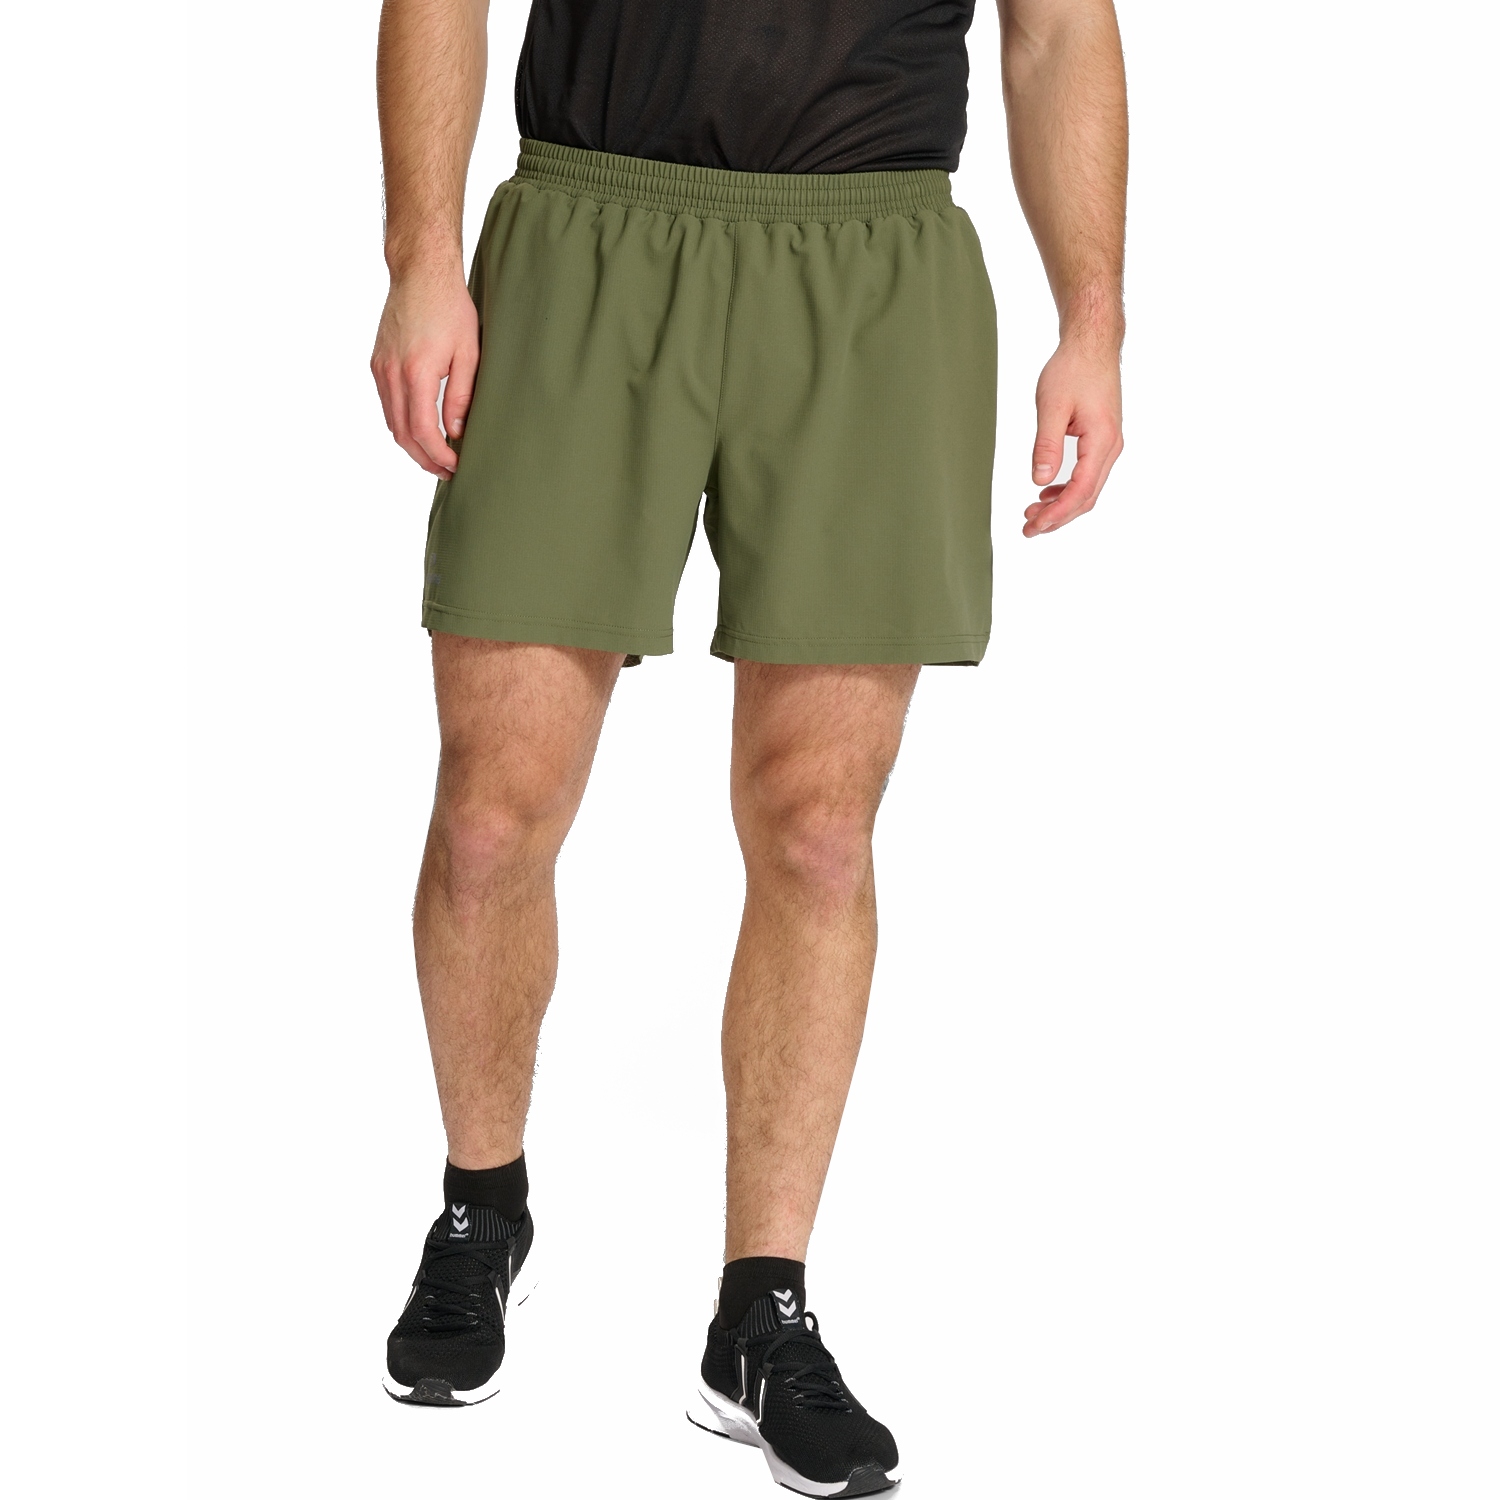 Productfoto van Newline Dallas Shorts - four leaf clover